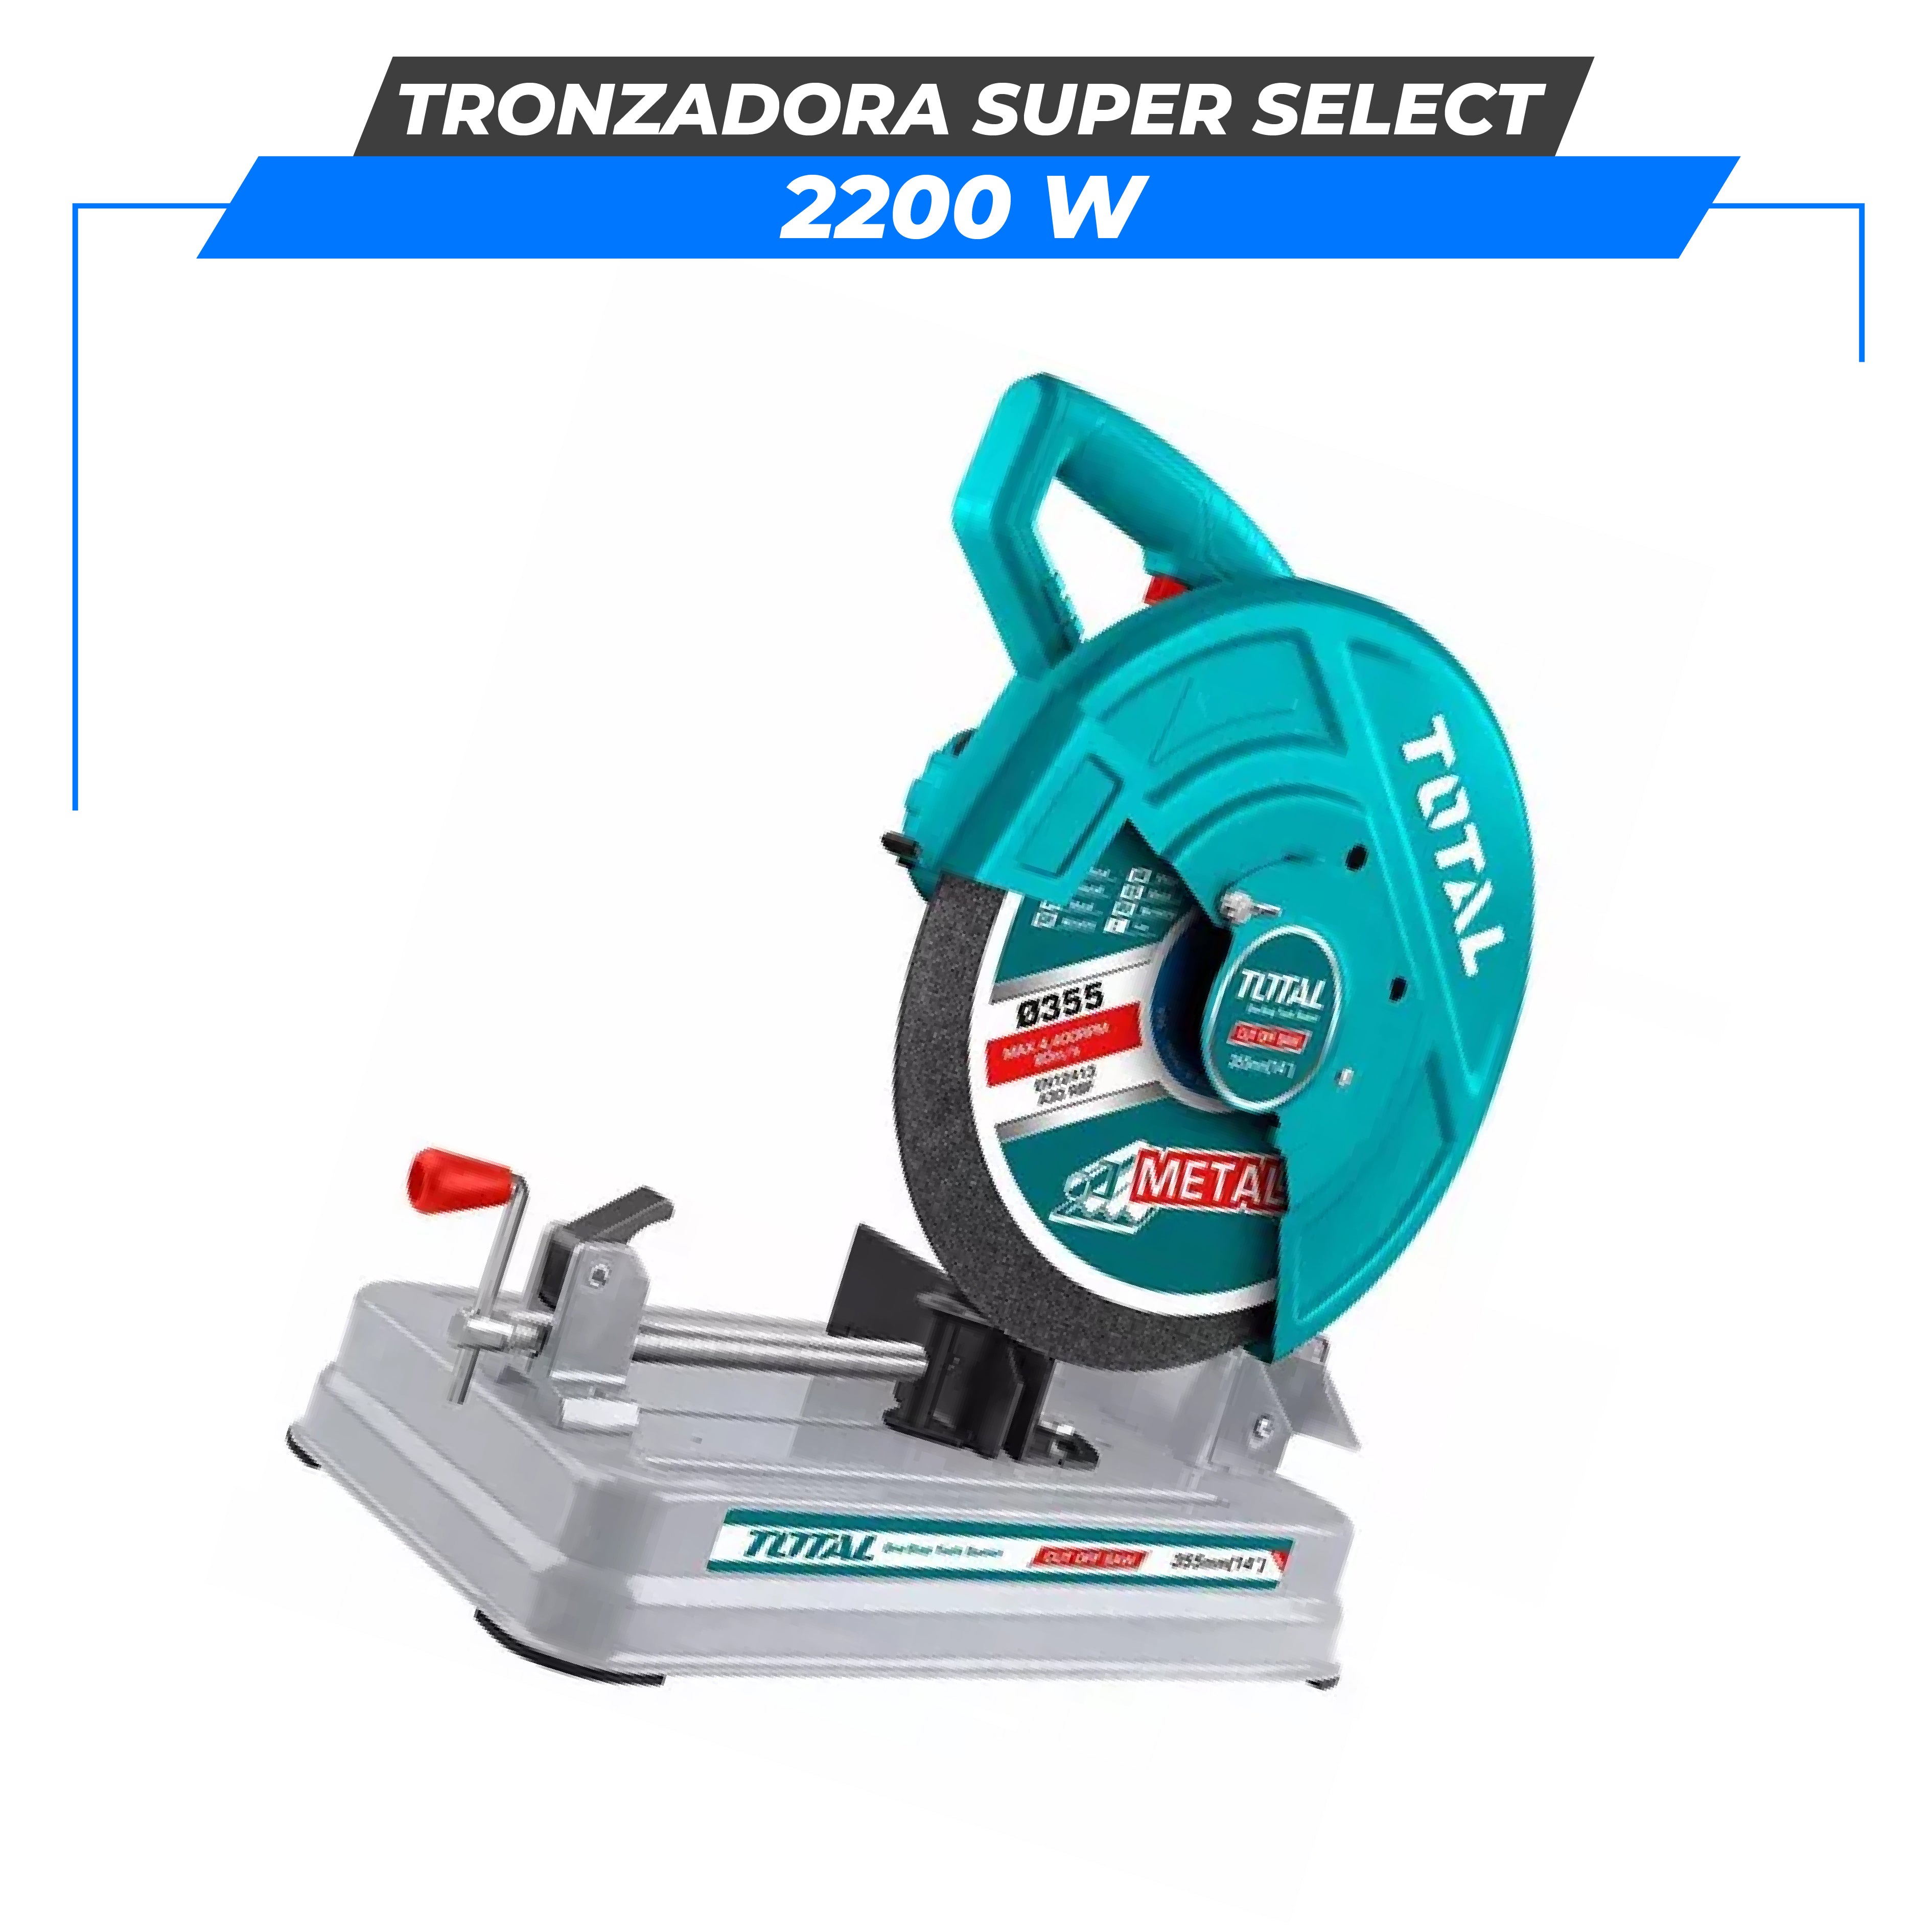 Tronzadora 2200W SUPER SELECT